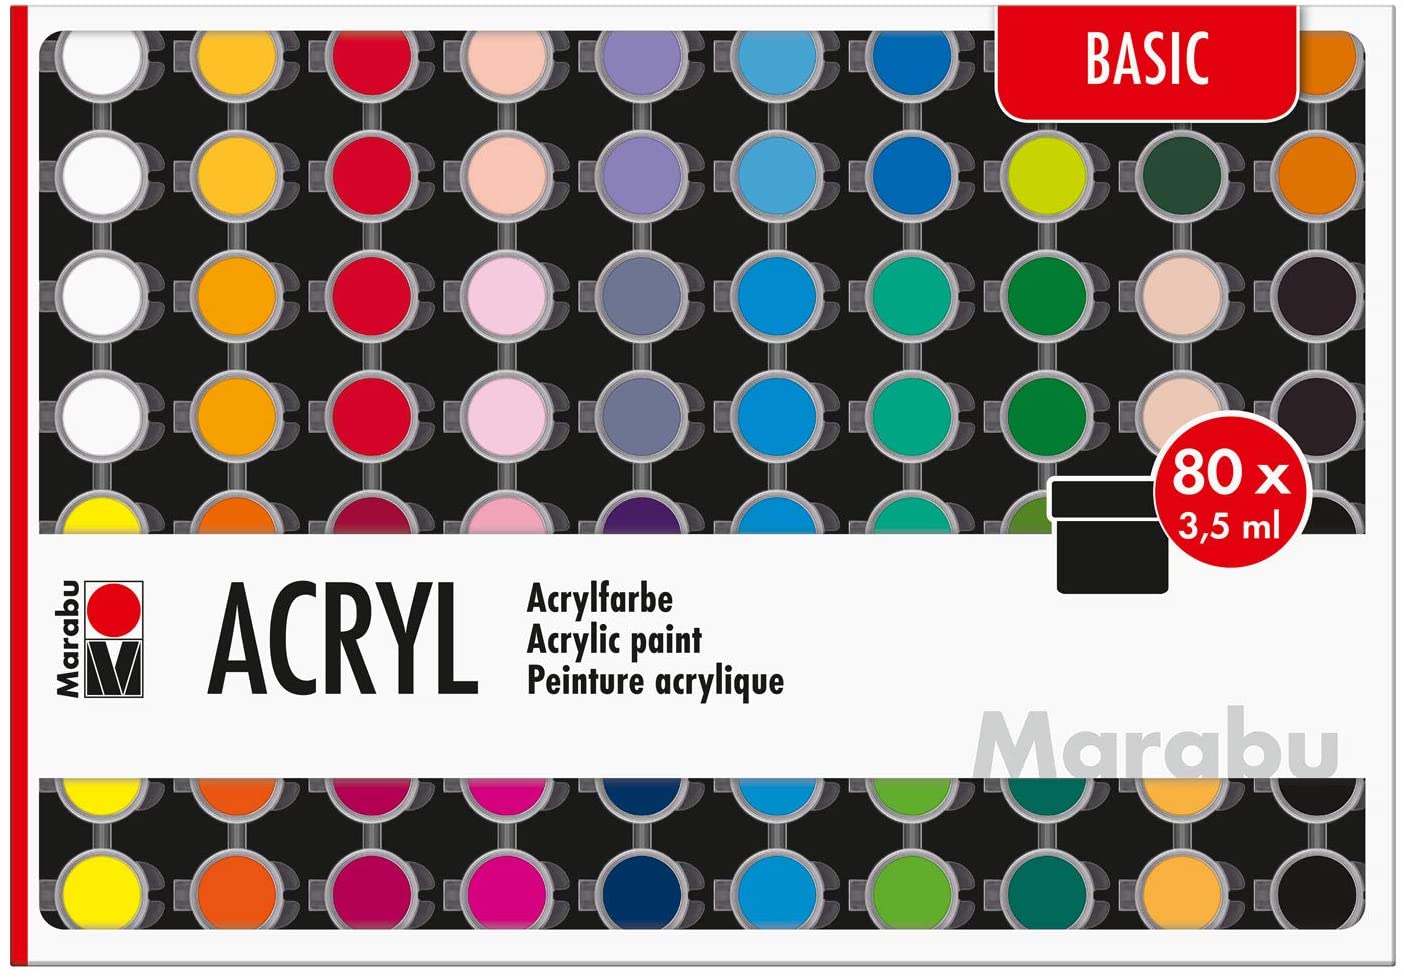 Marabu Acrylfarben-Set BASIC, 80 x 3,5 ml